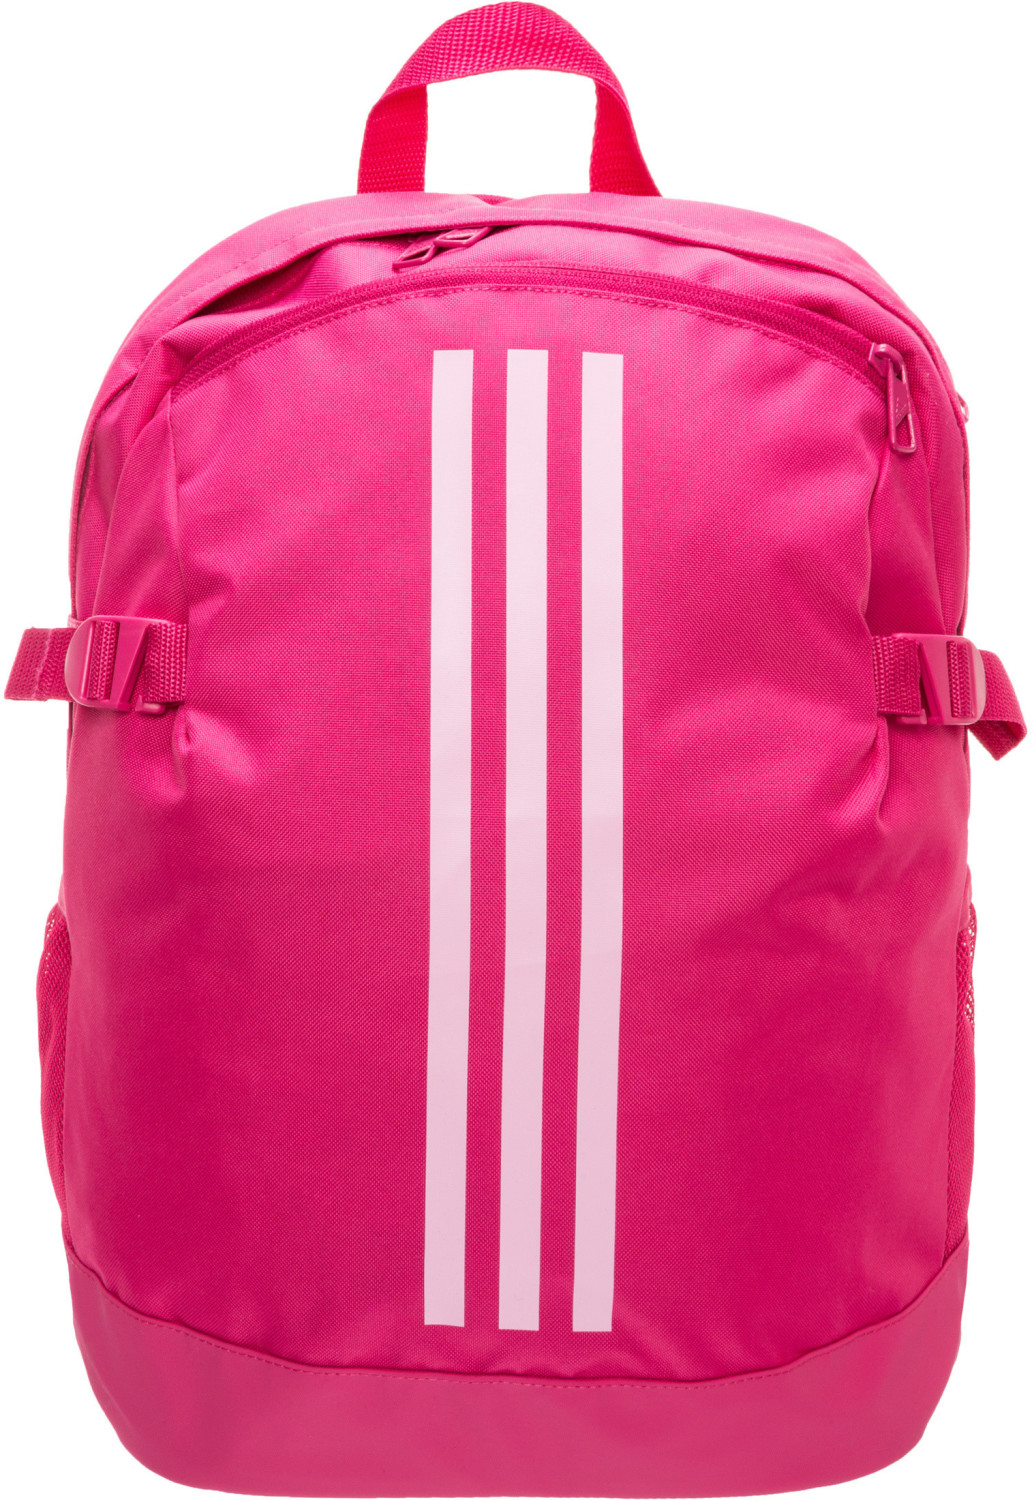 Adidas 3-Stripes Power Backpack M real magenta/true pink/true pink (DU1992)